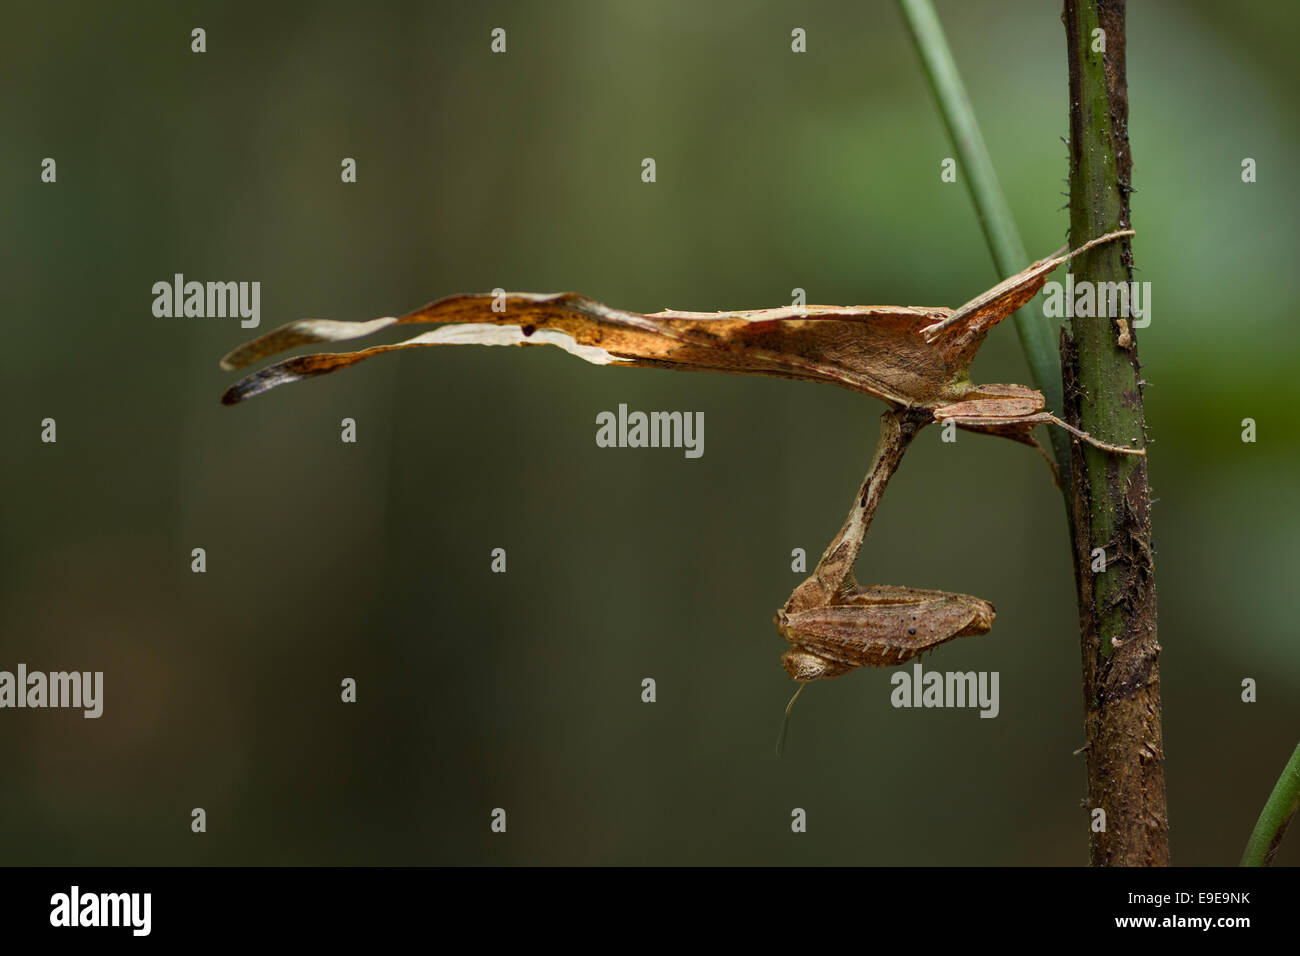 A Praying Mantis in the Amazon rainforest, Peru. Stock Photo